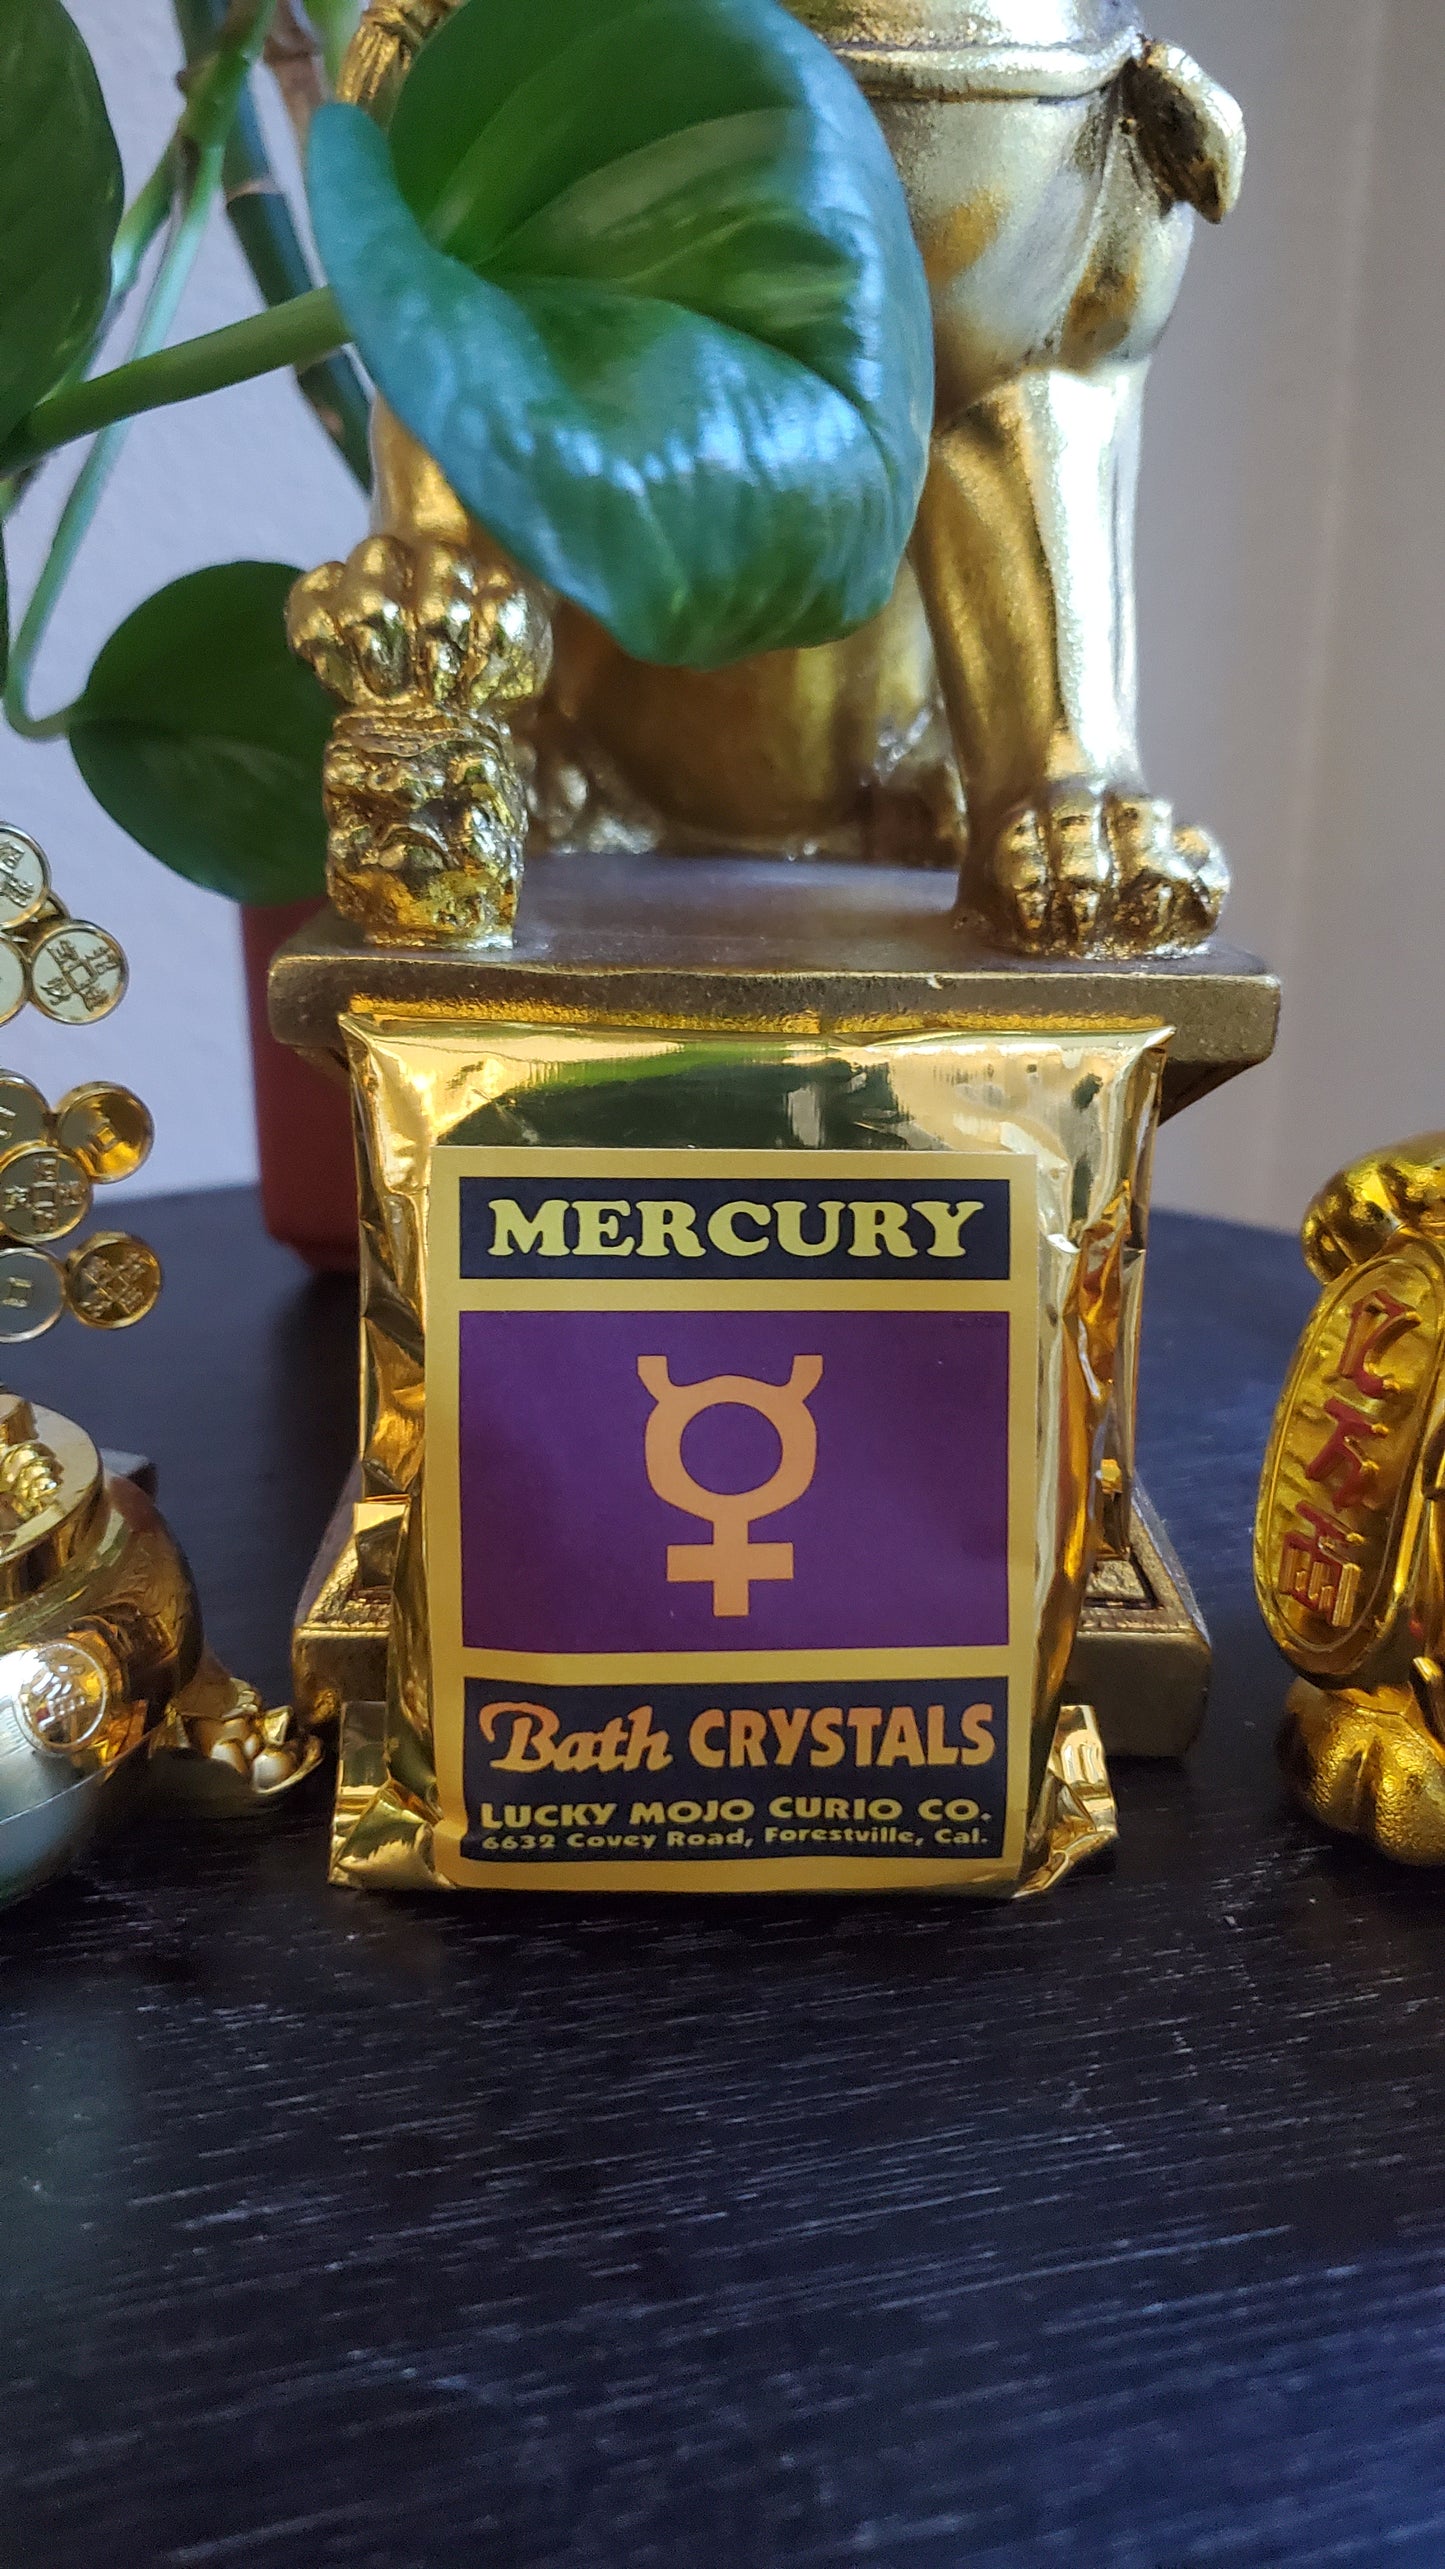 LuckyMojoCurioCo "Mercury" Bath Crystals #Great Deal #BathCrystal #SpiritBath #CleansingRituals #RitualMagick #LoveMagick